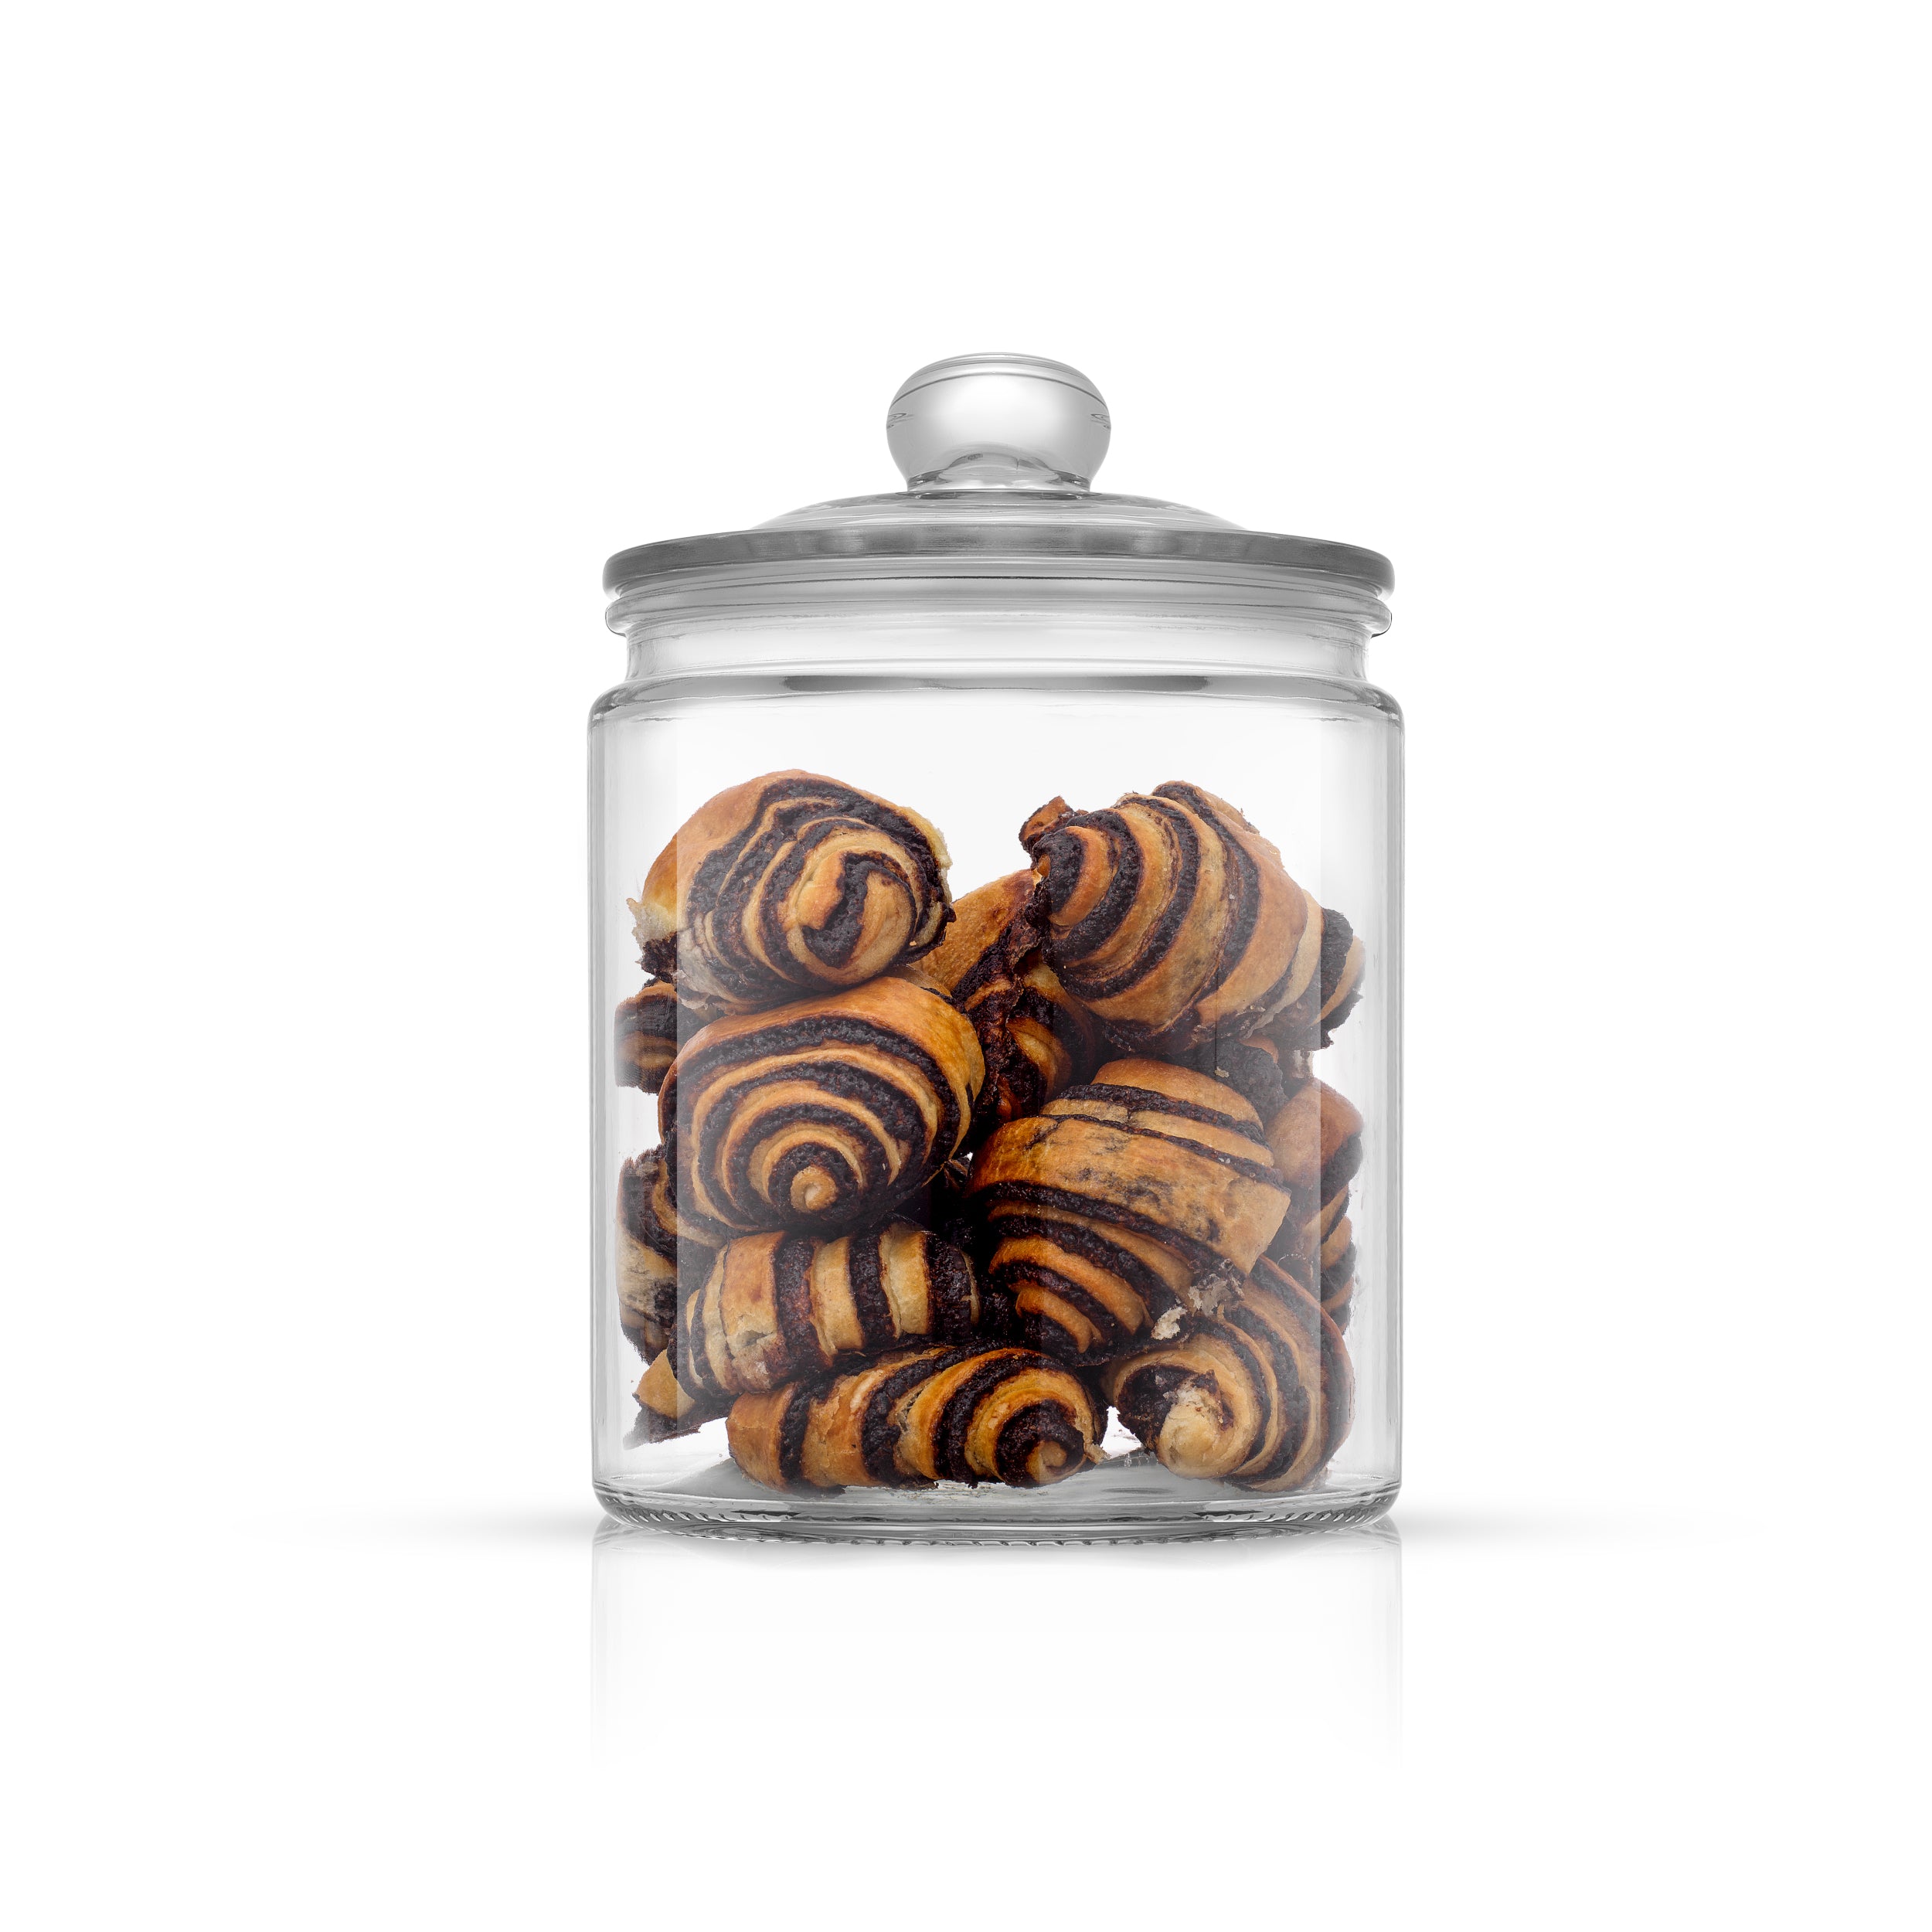 JoyFul Round Glass Cookie Jar with Airtight Lids - 67 oz - Set of 2